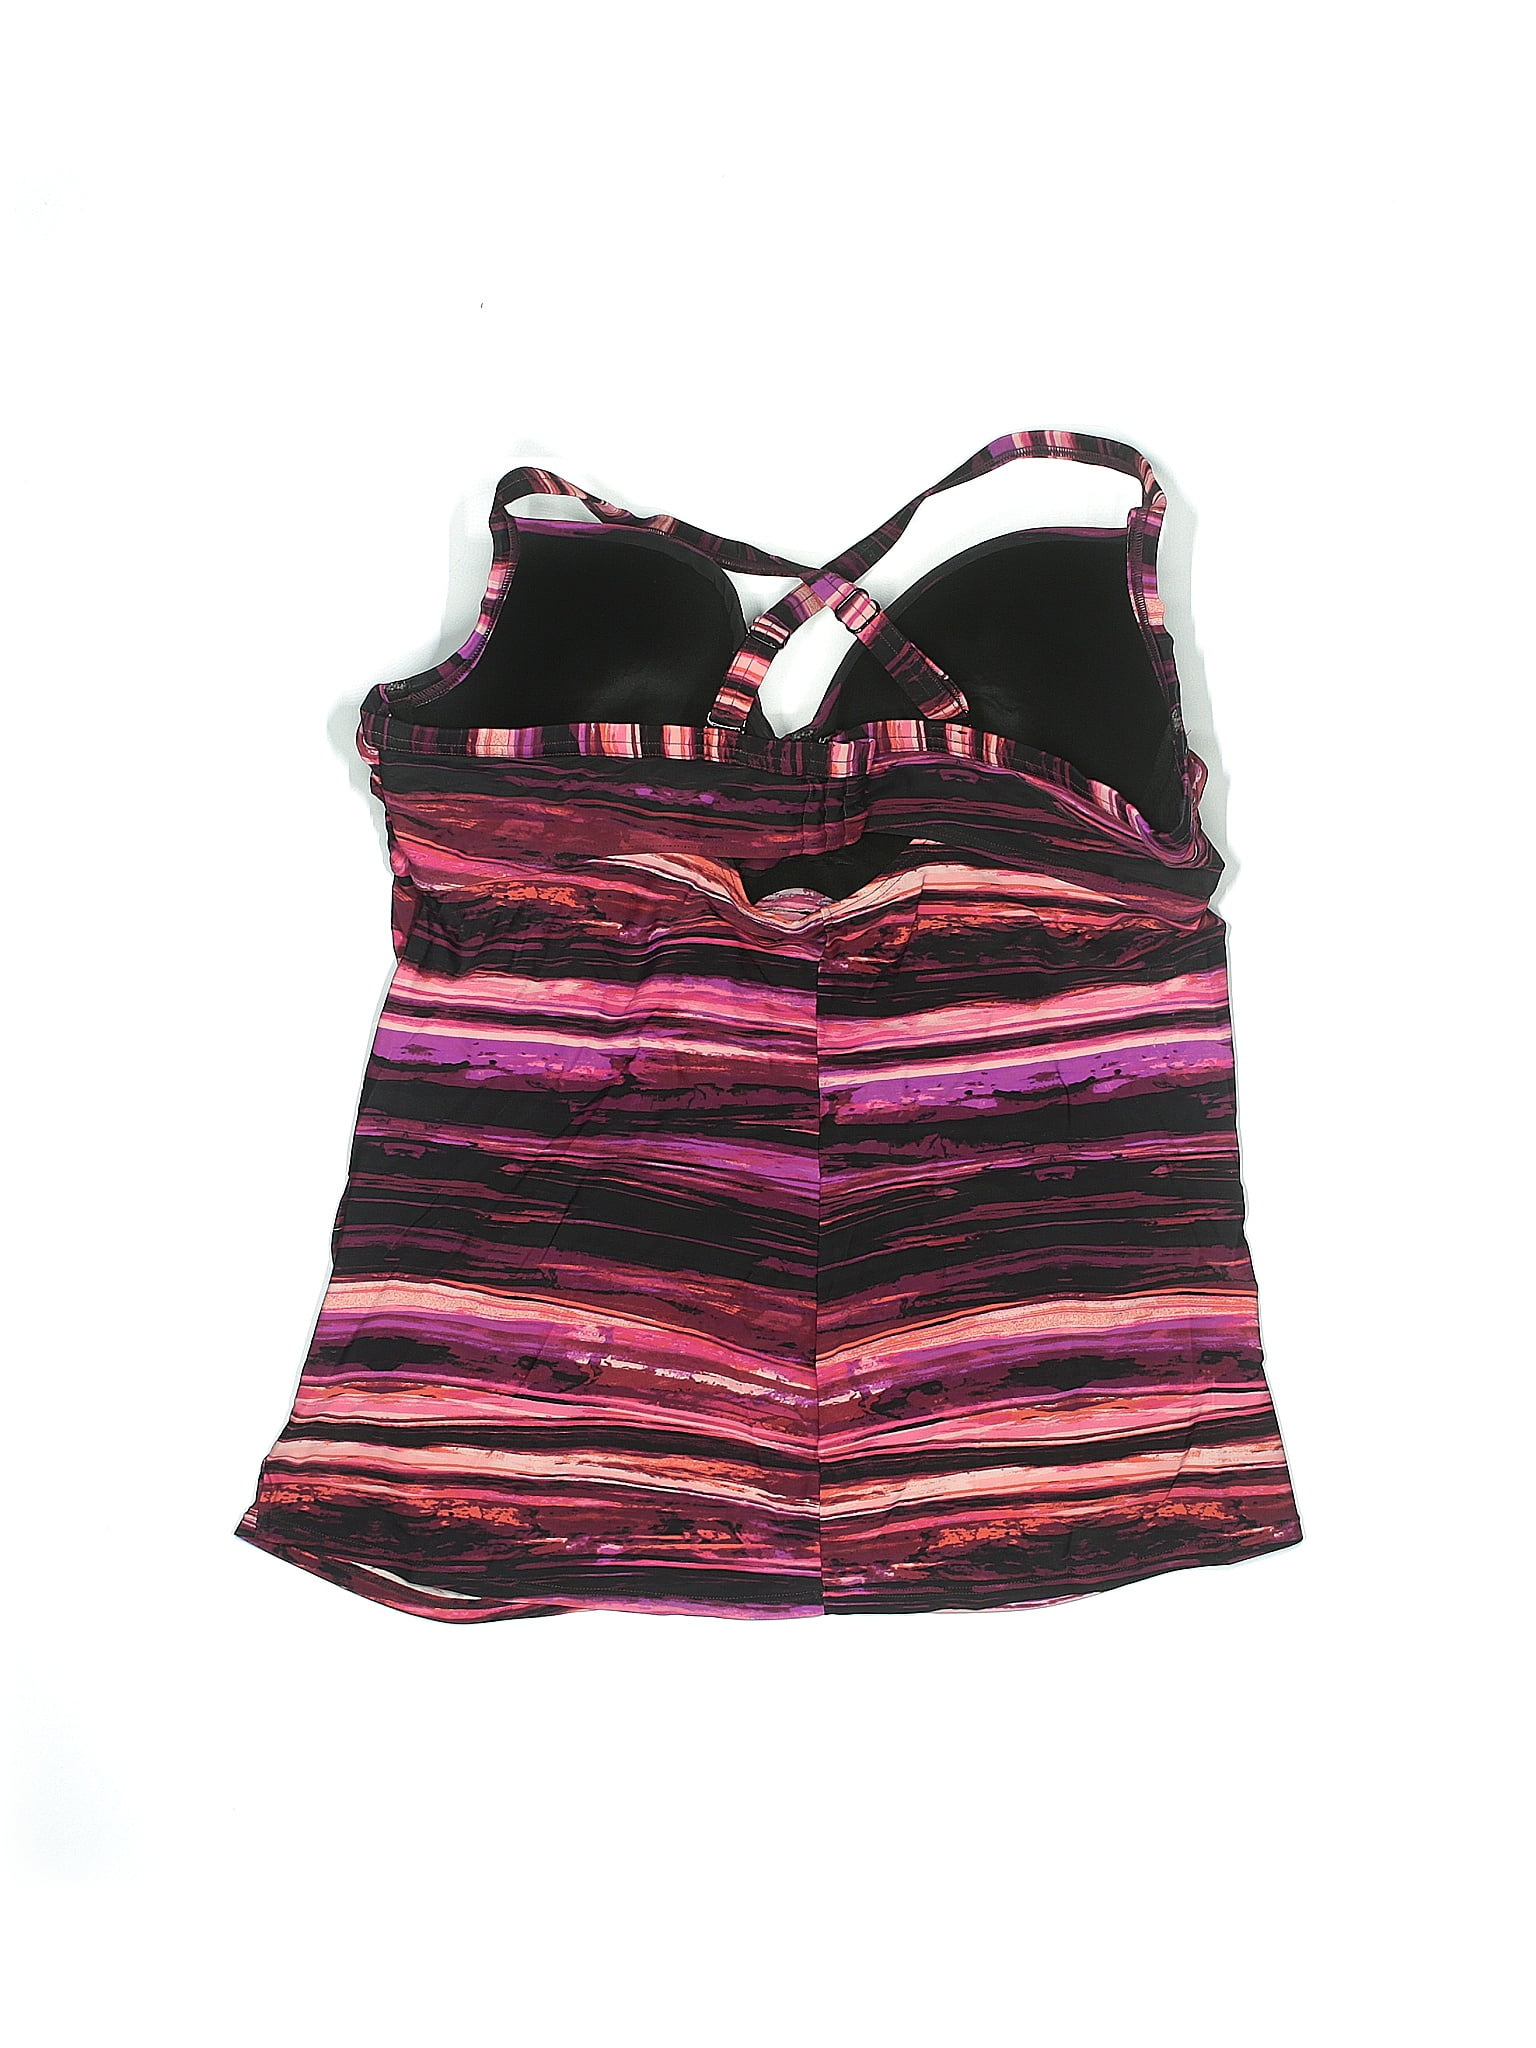 Swim by Cacique Multi Color Purple Swimsuit Top Size XL (40DD